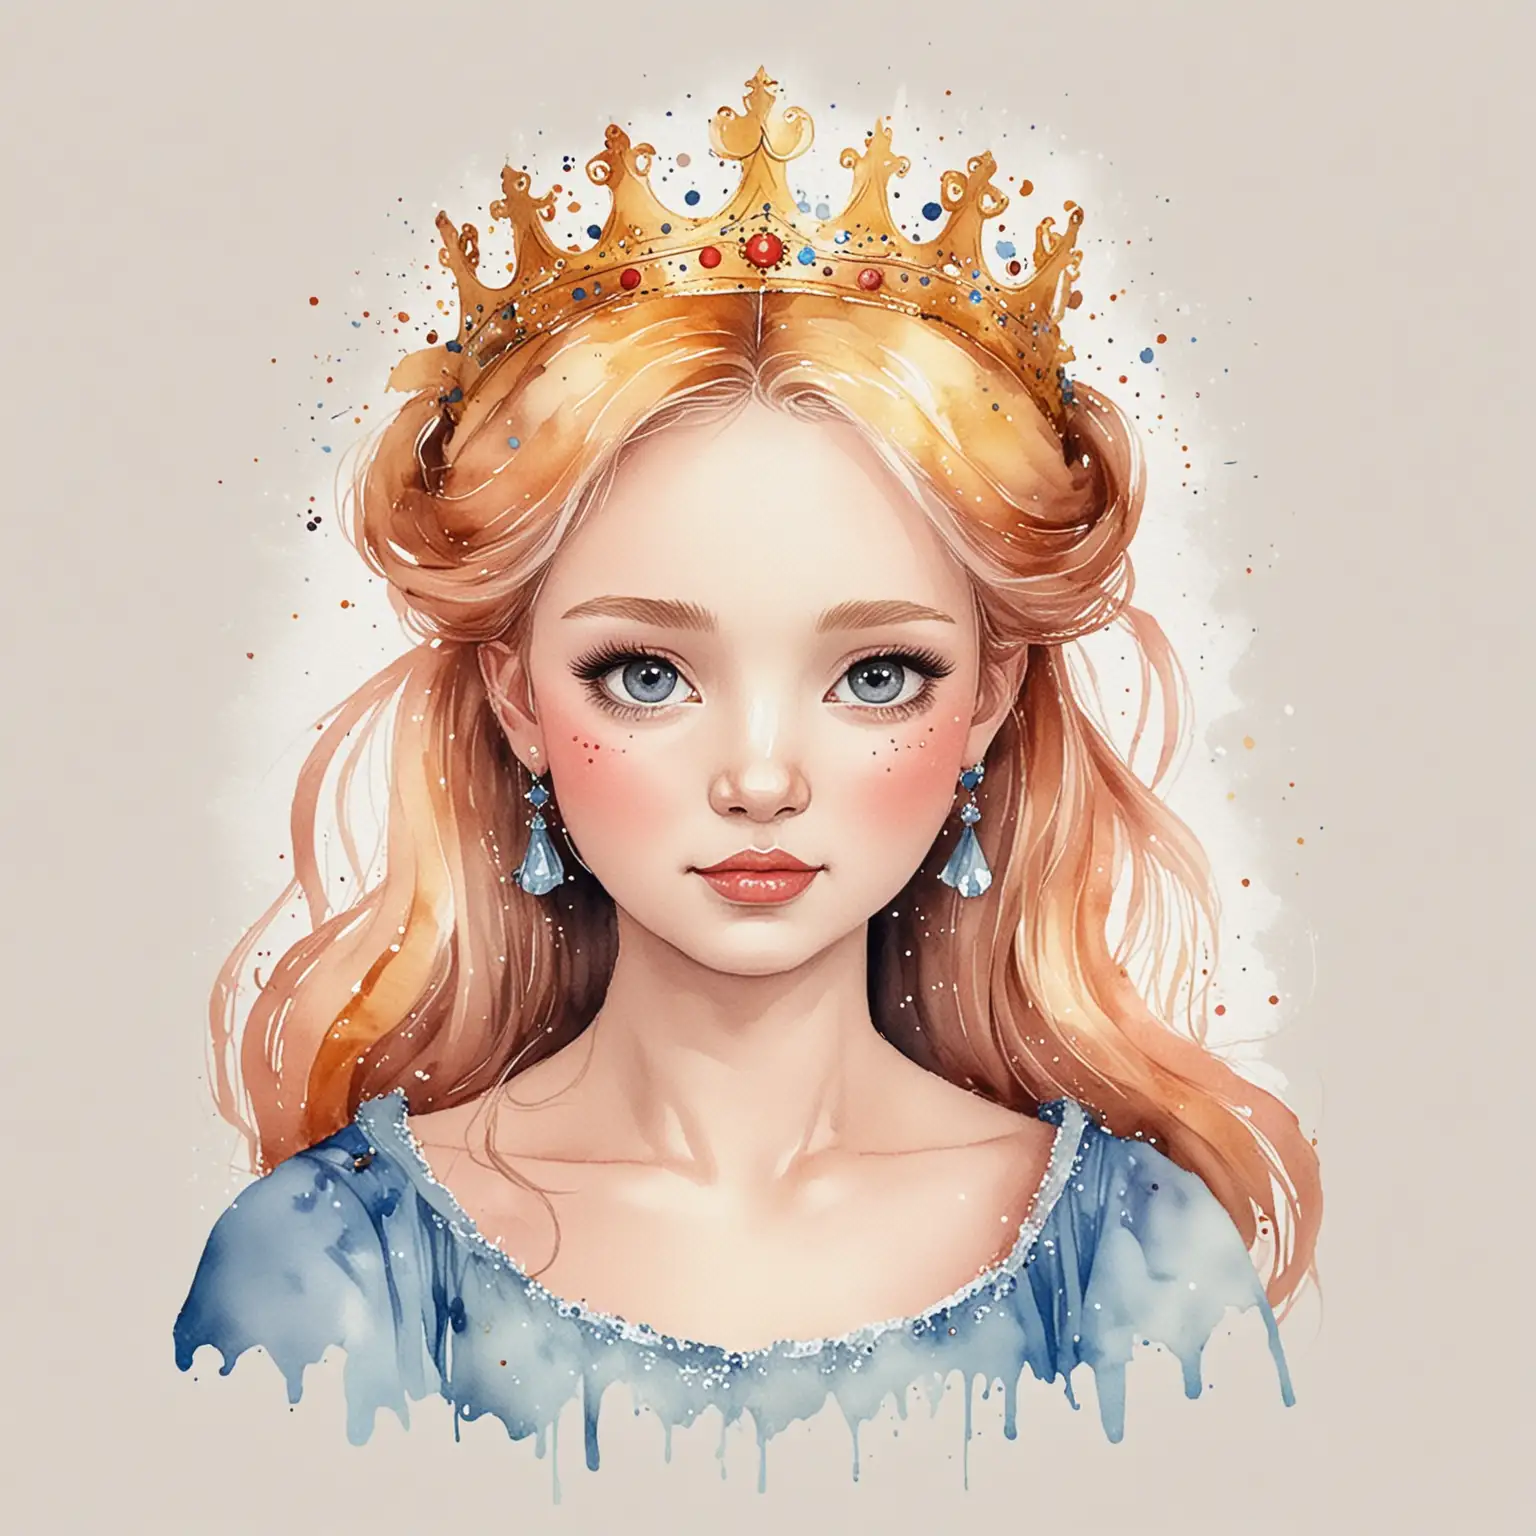 Watercolor Princess Portrait on White Background